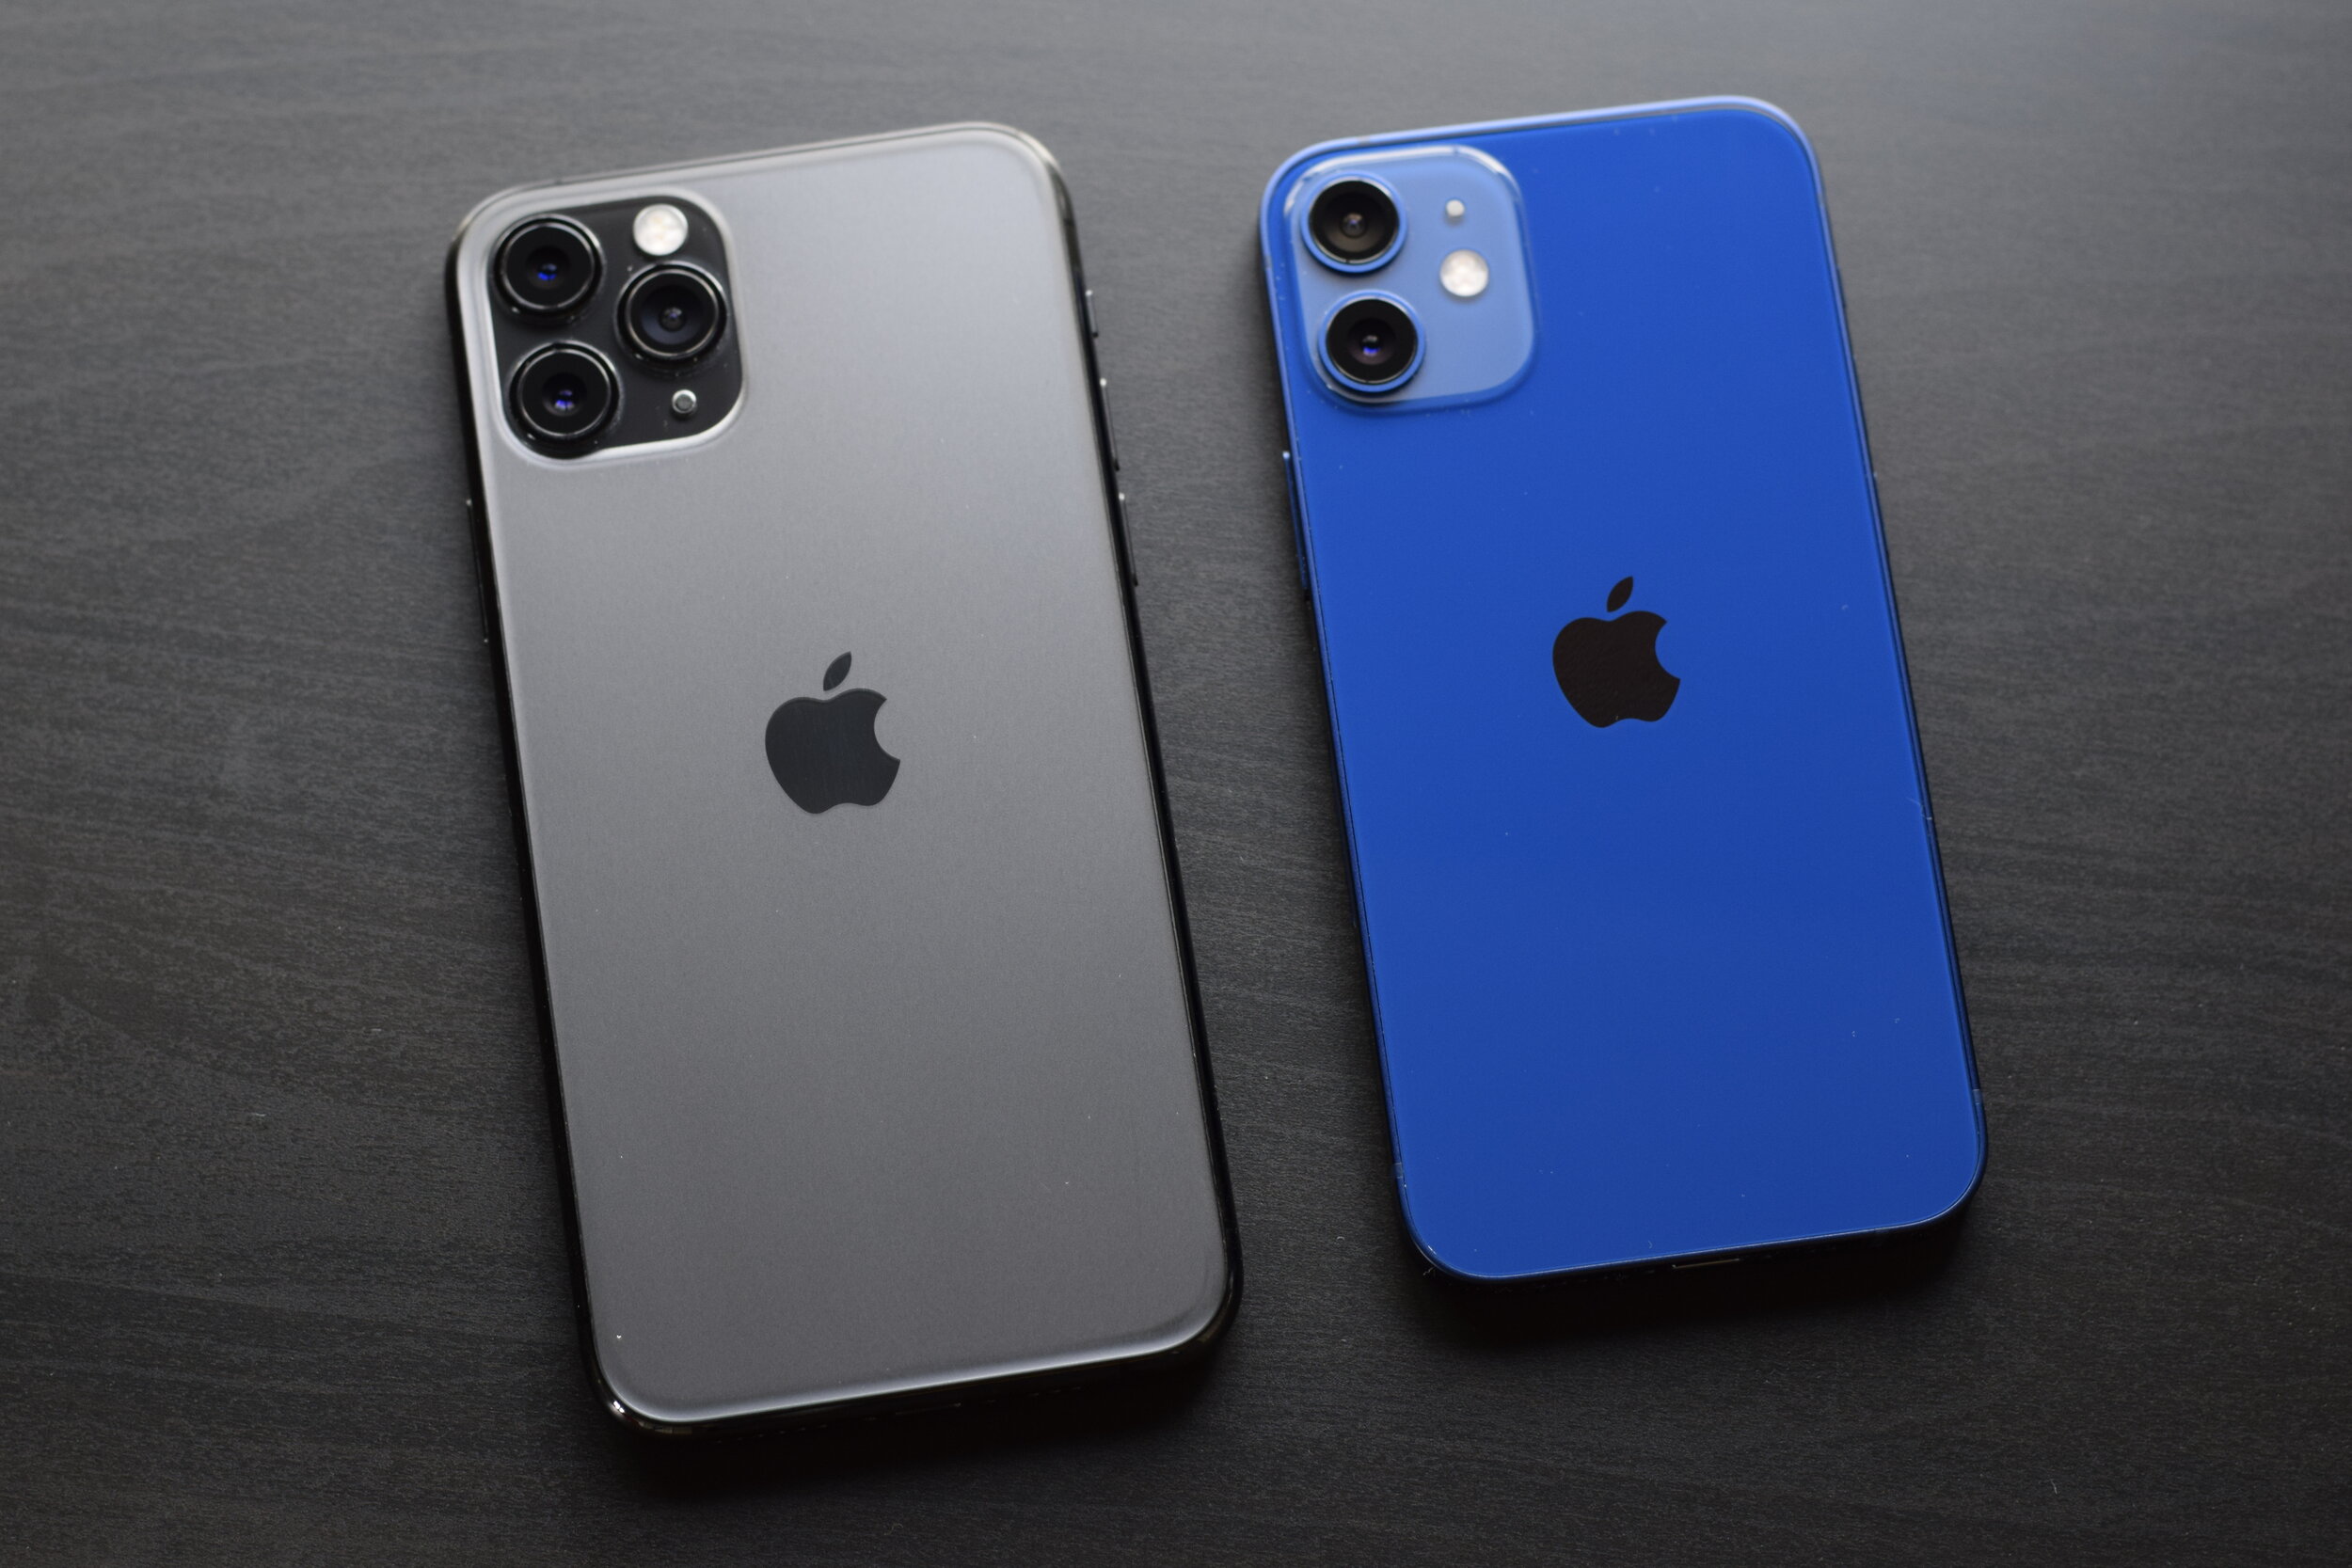 iPhone 12 Mini vs iPhone 11 